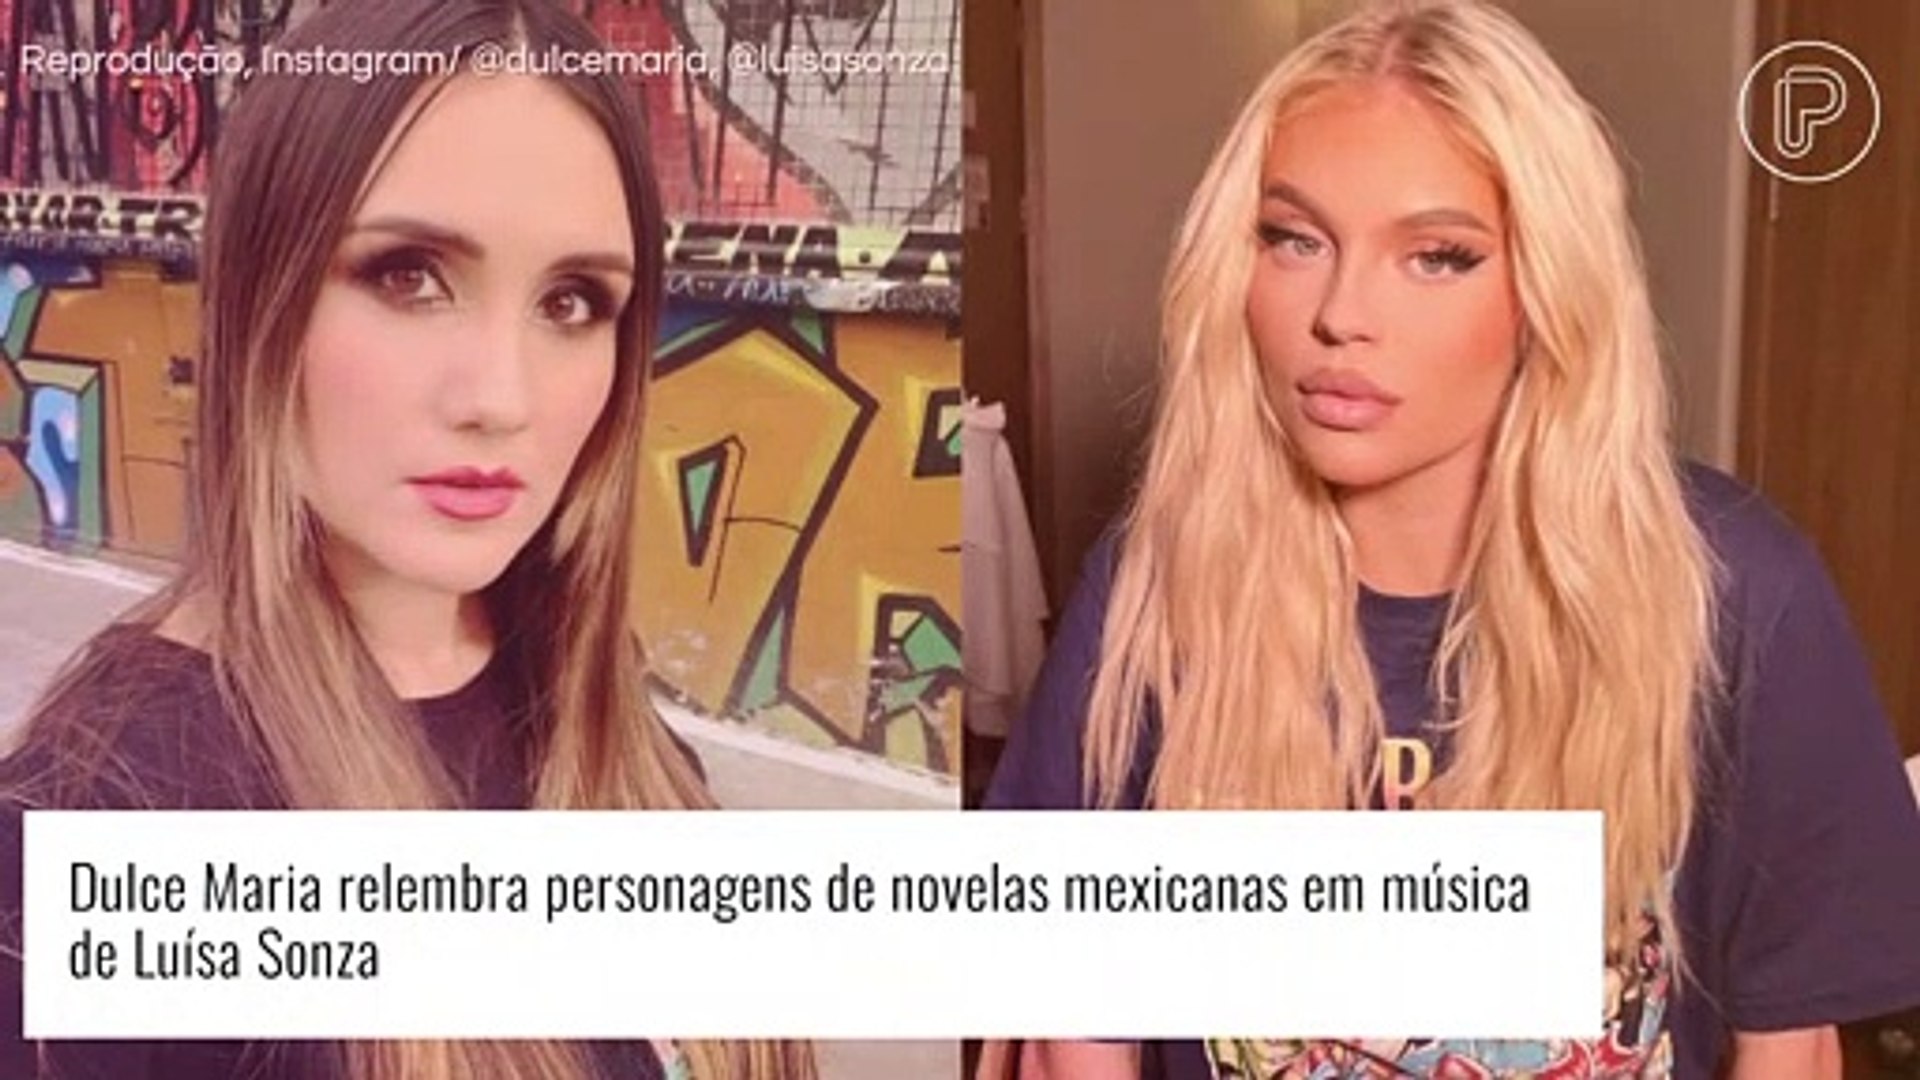 Dulce Maria resgata papéis de novelas mexicanas em vídeo e fãs pedem feat  Luísa Sonza. Entenda! - Vídeo Dailymotion